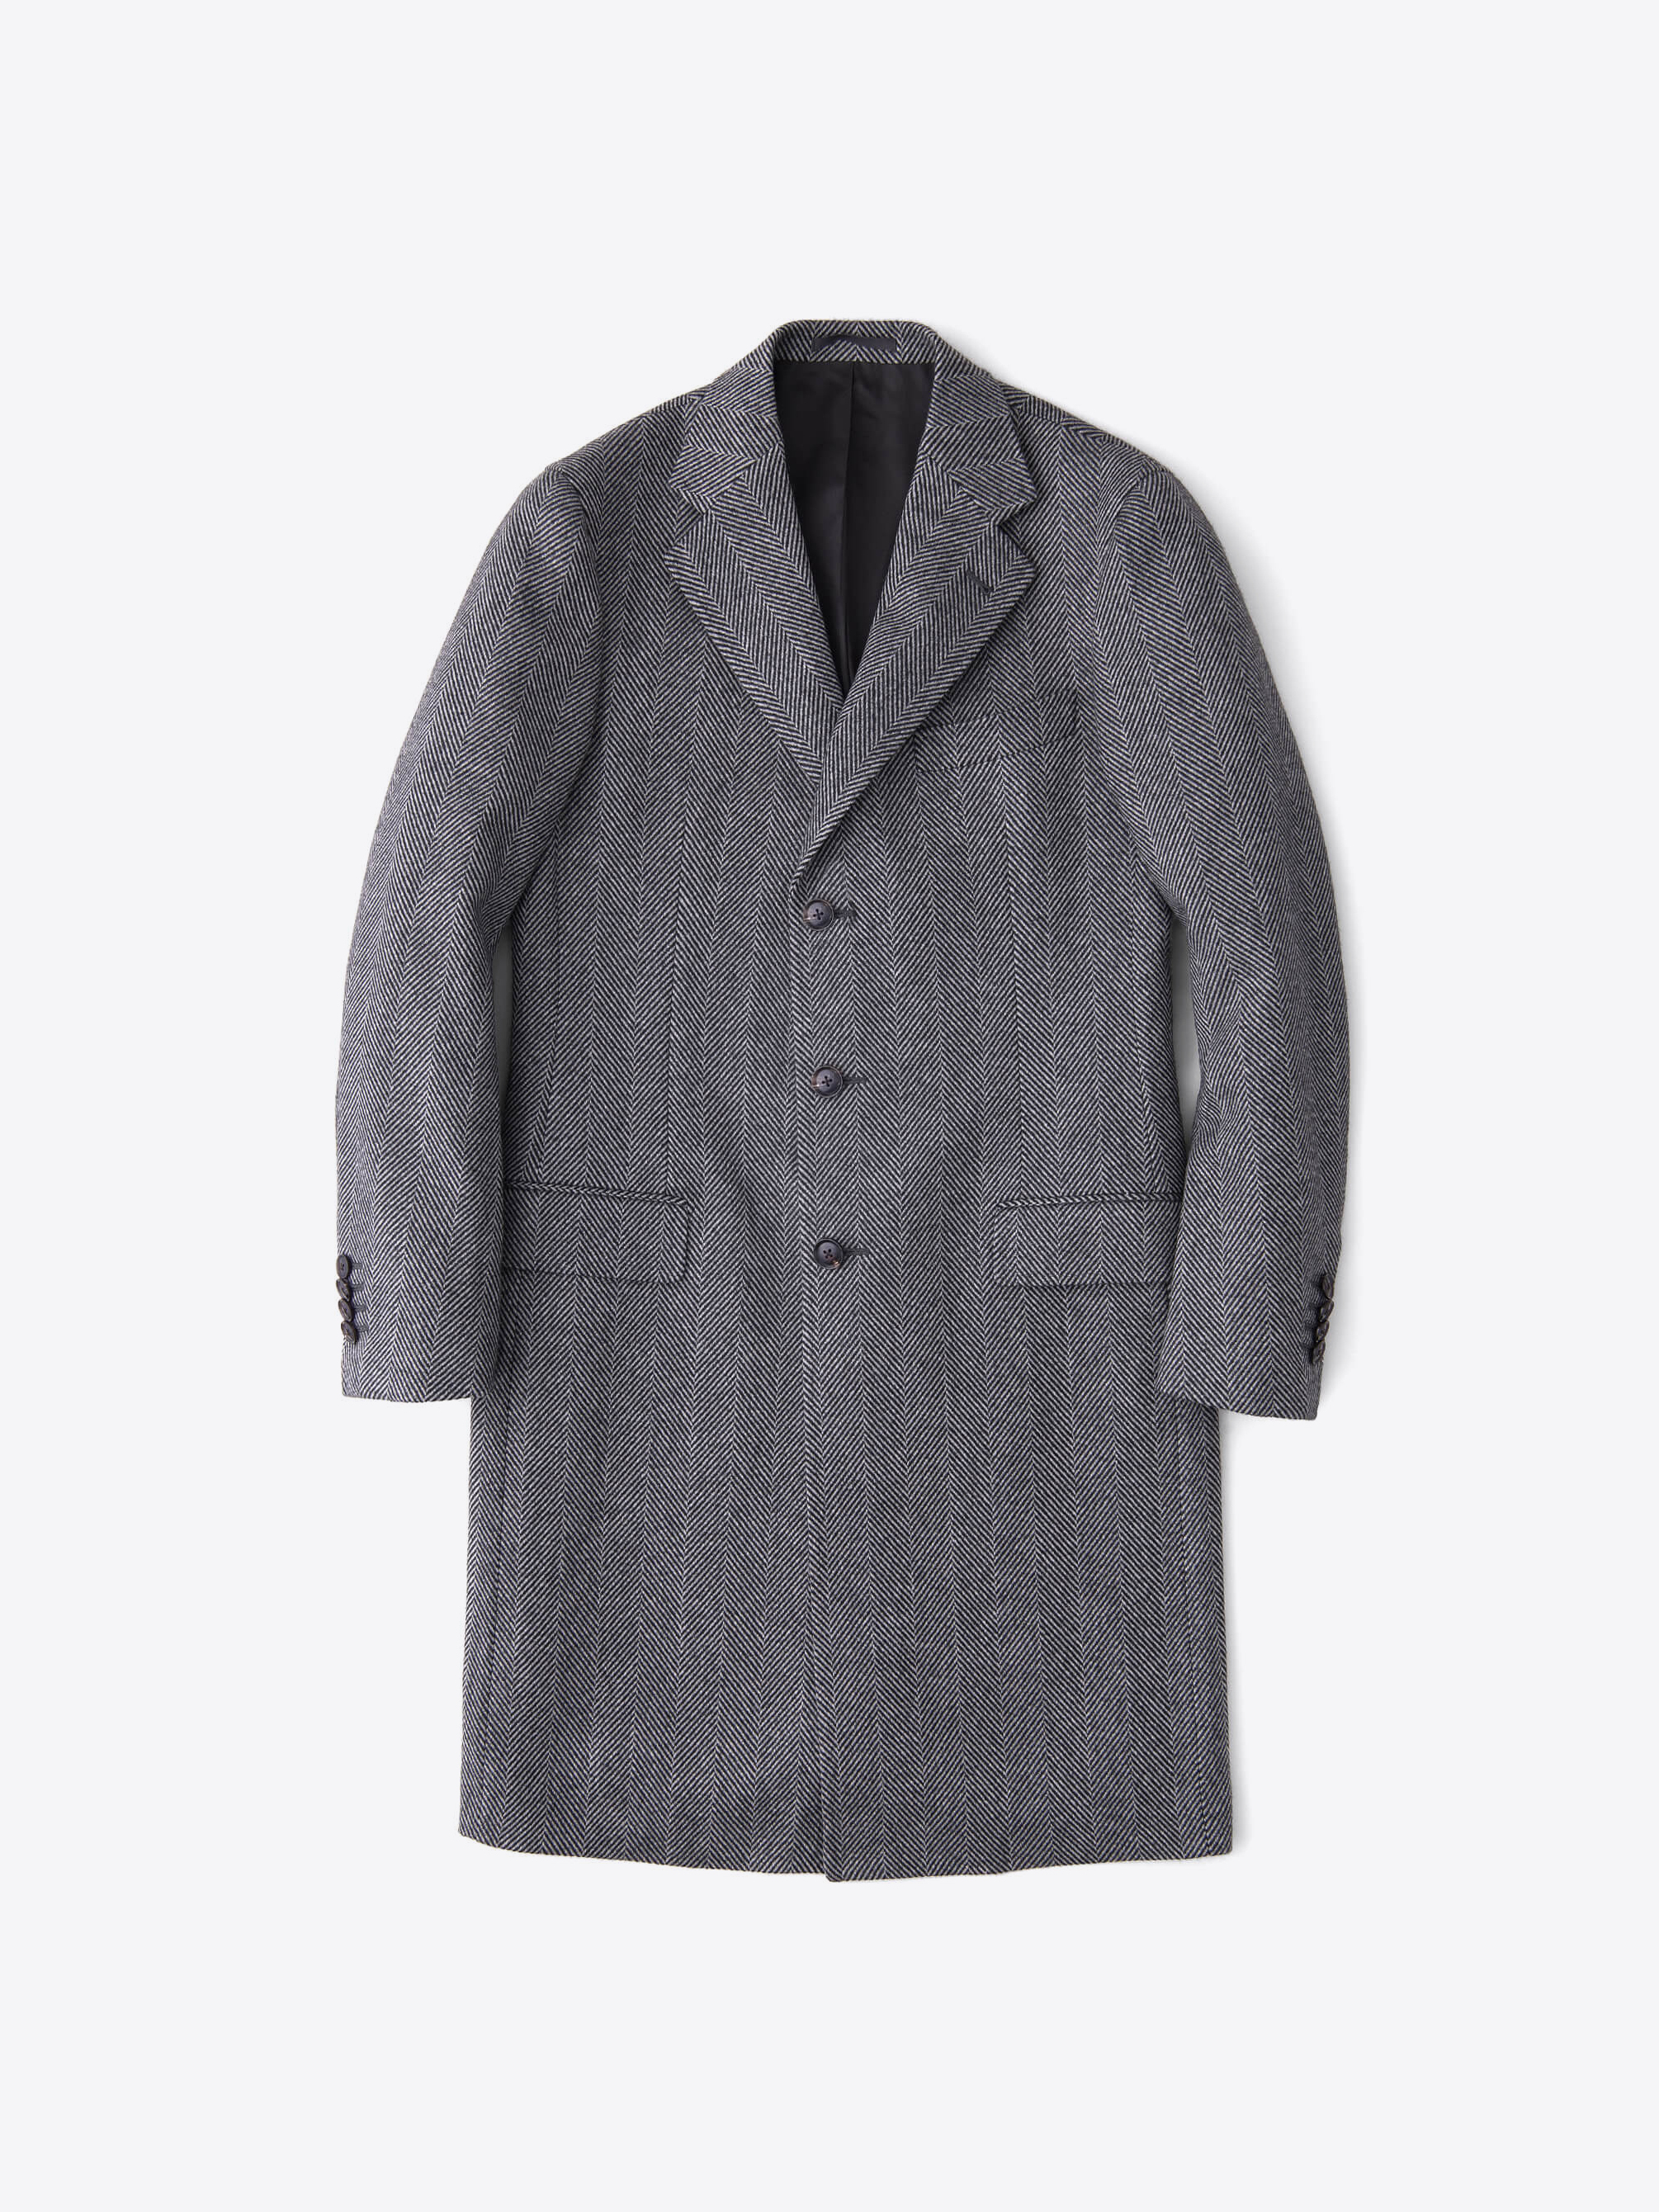 Zoom Image of Bleecker Grey Herringbone Wool and Cashmere Coat